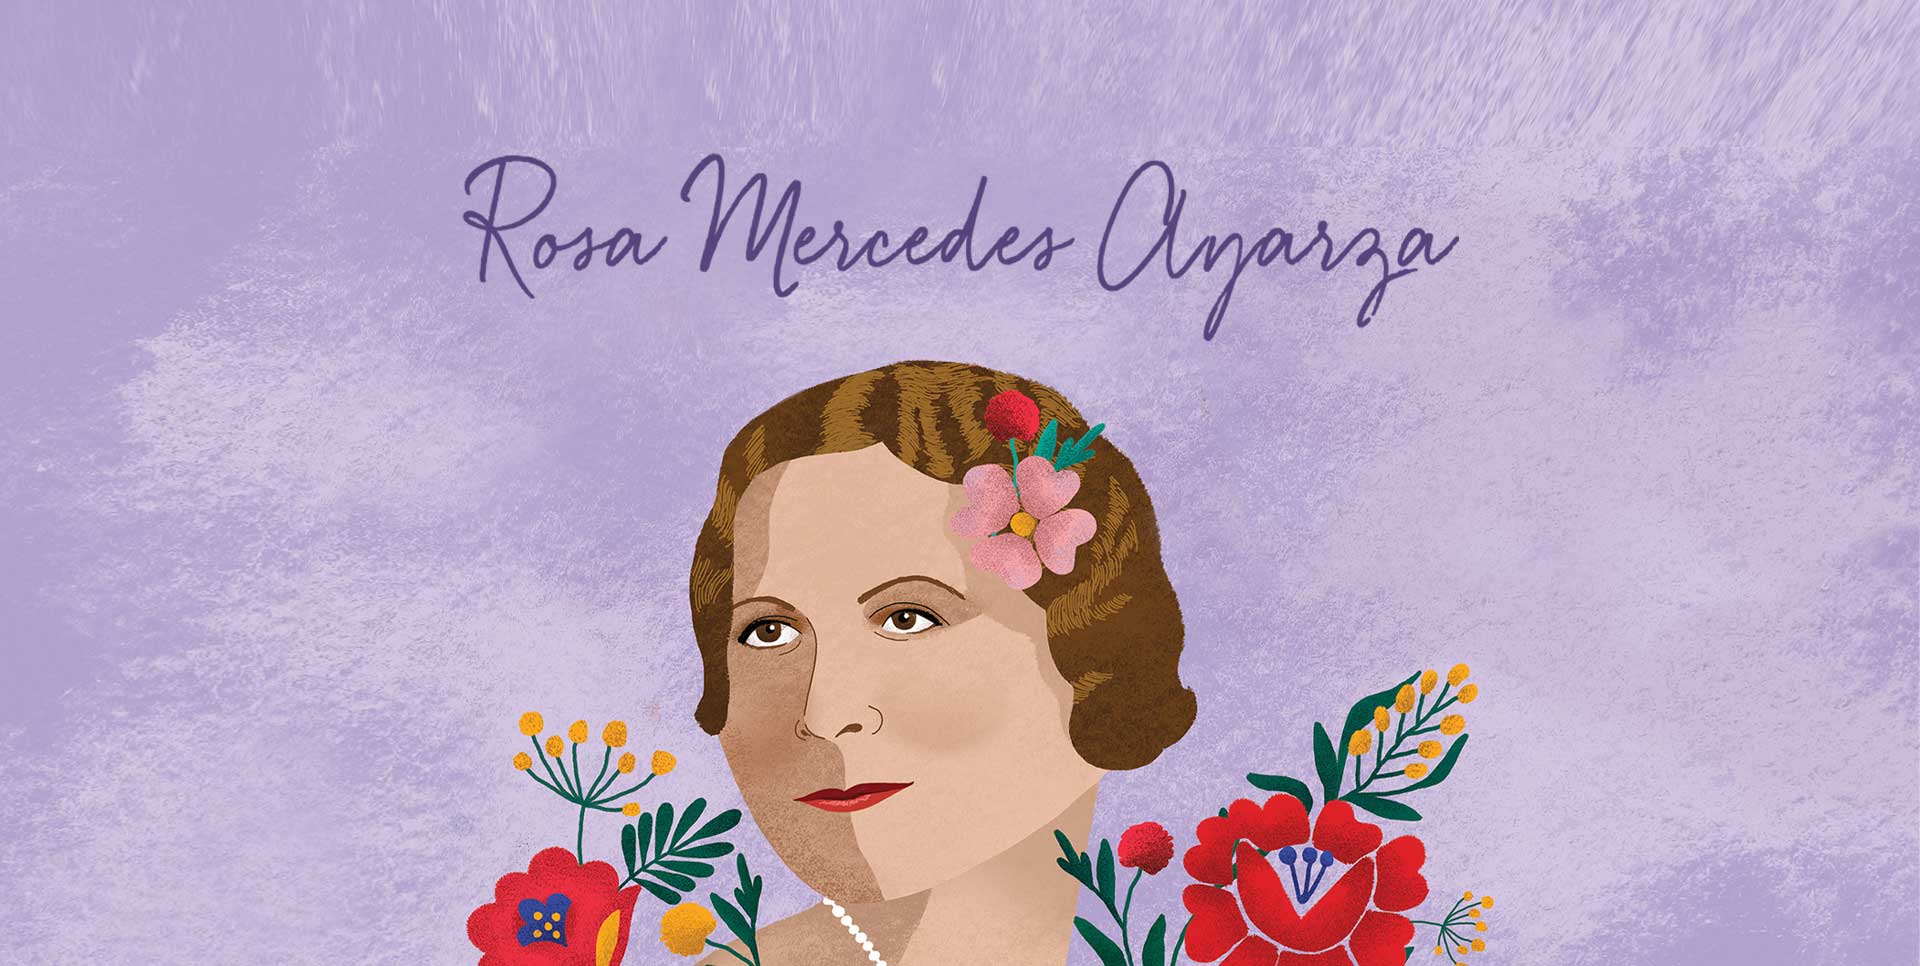 Mujeres del Bicentenario Rosa Mercedes Ayarza osnjb